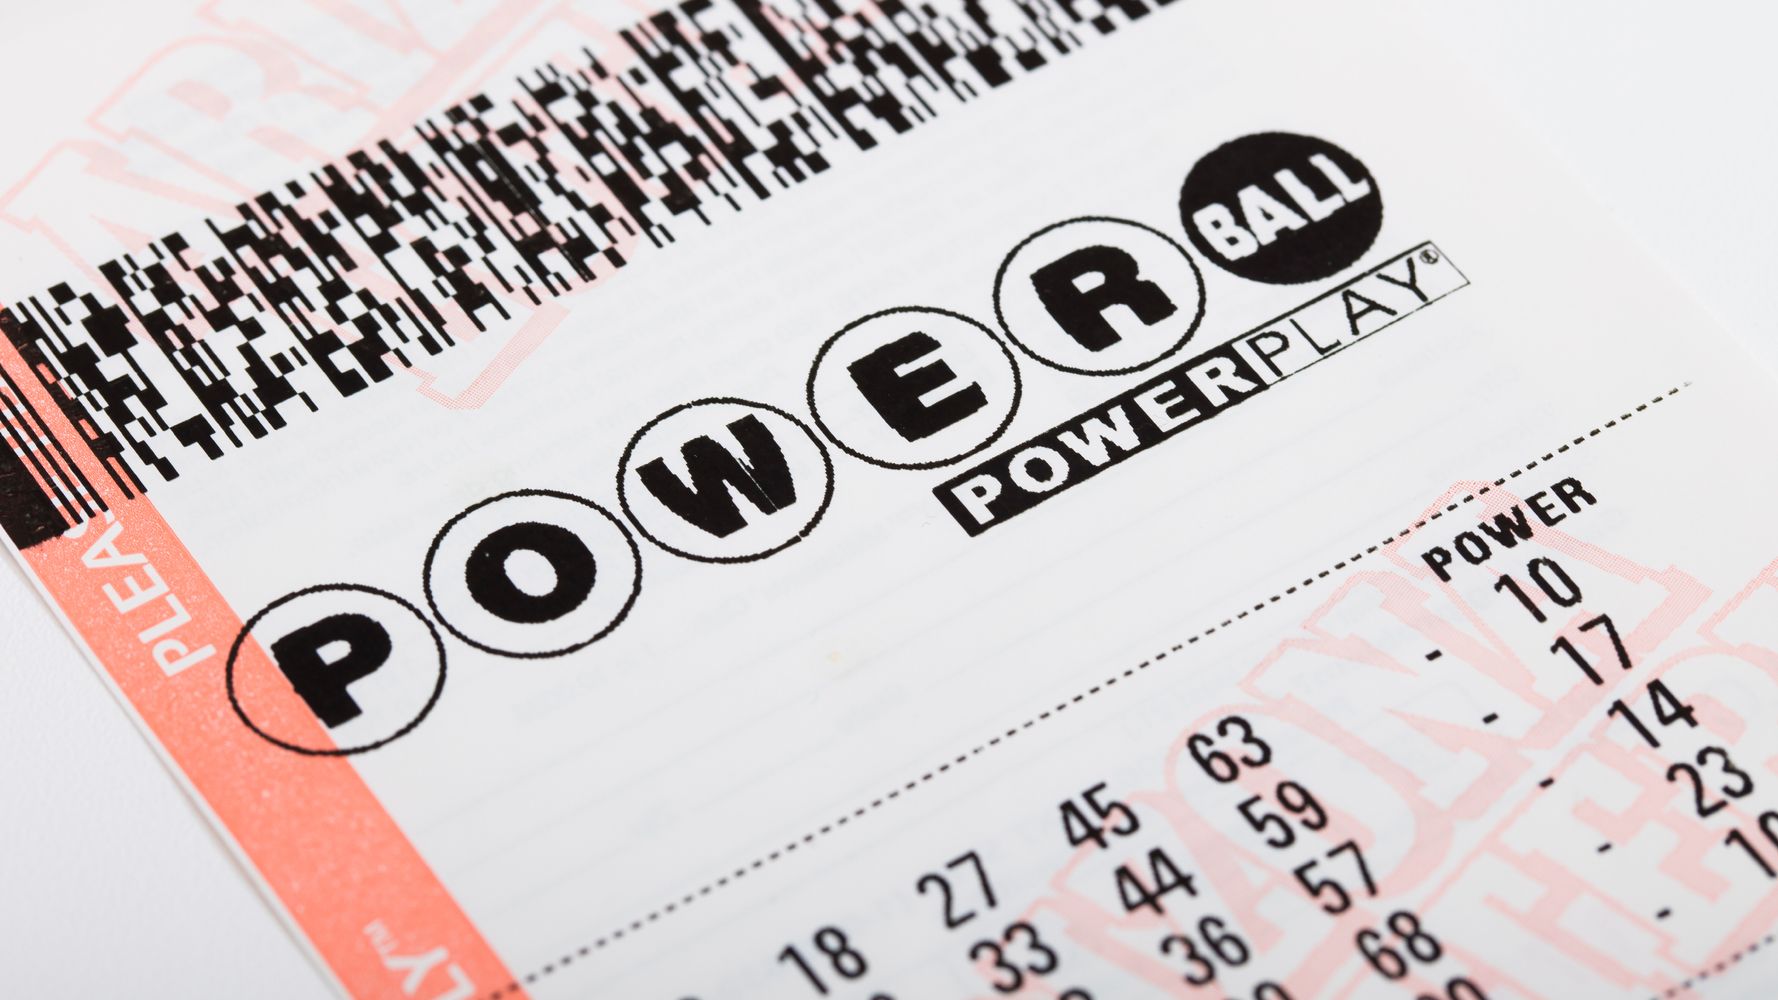 Single Ticket Sold In California Scoops $699 Million Powerball Jackpot